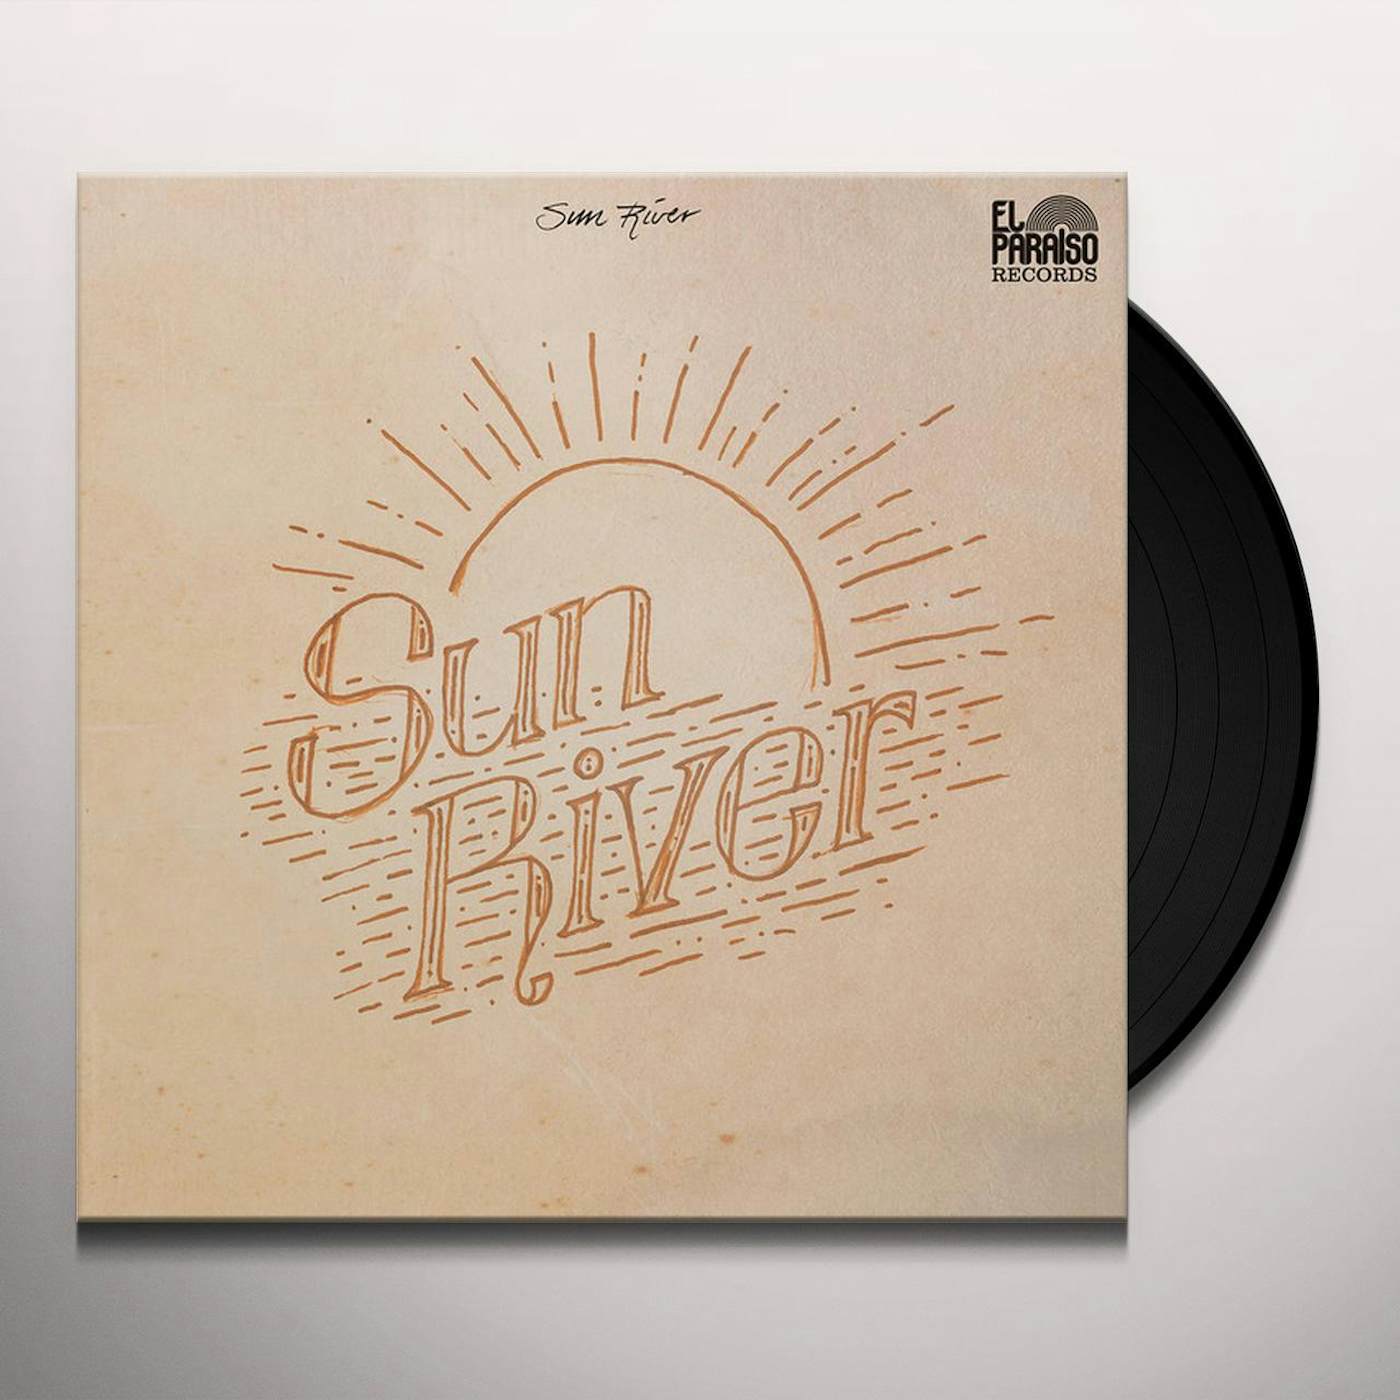 Sun River Vinyl Record